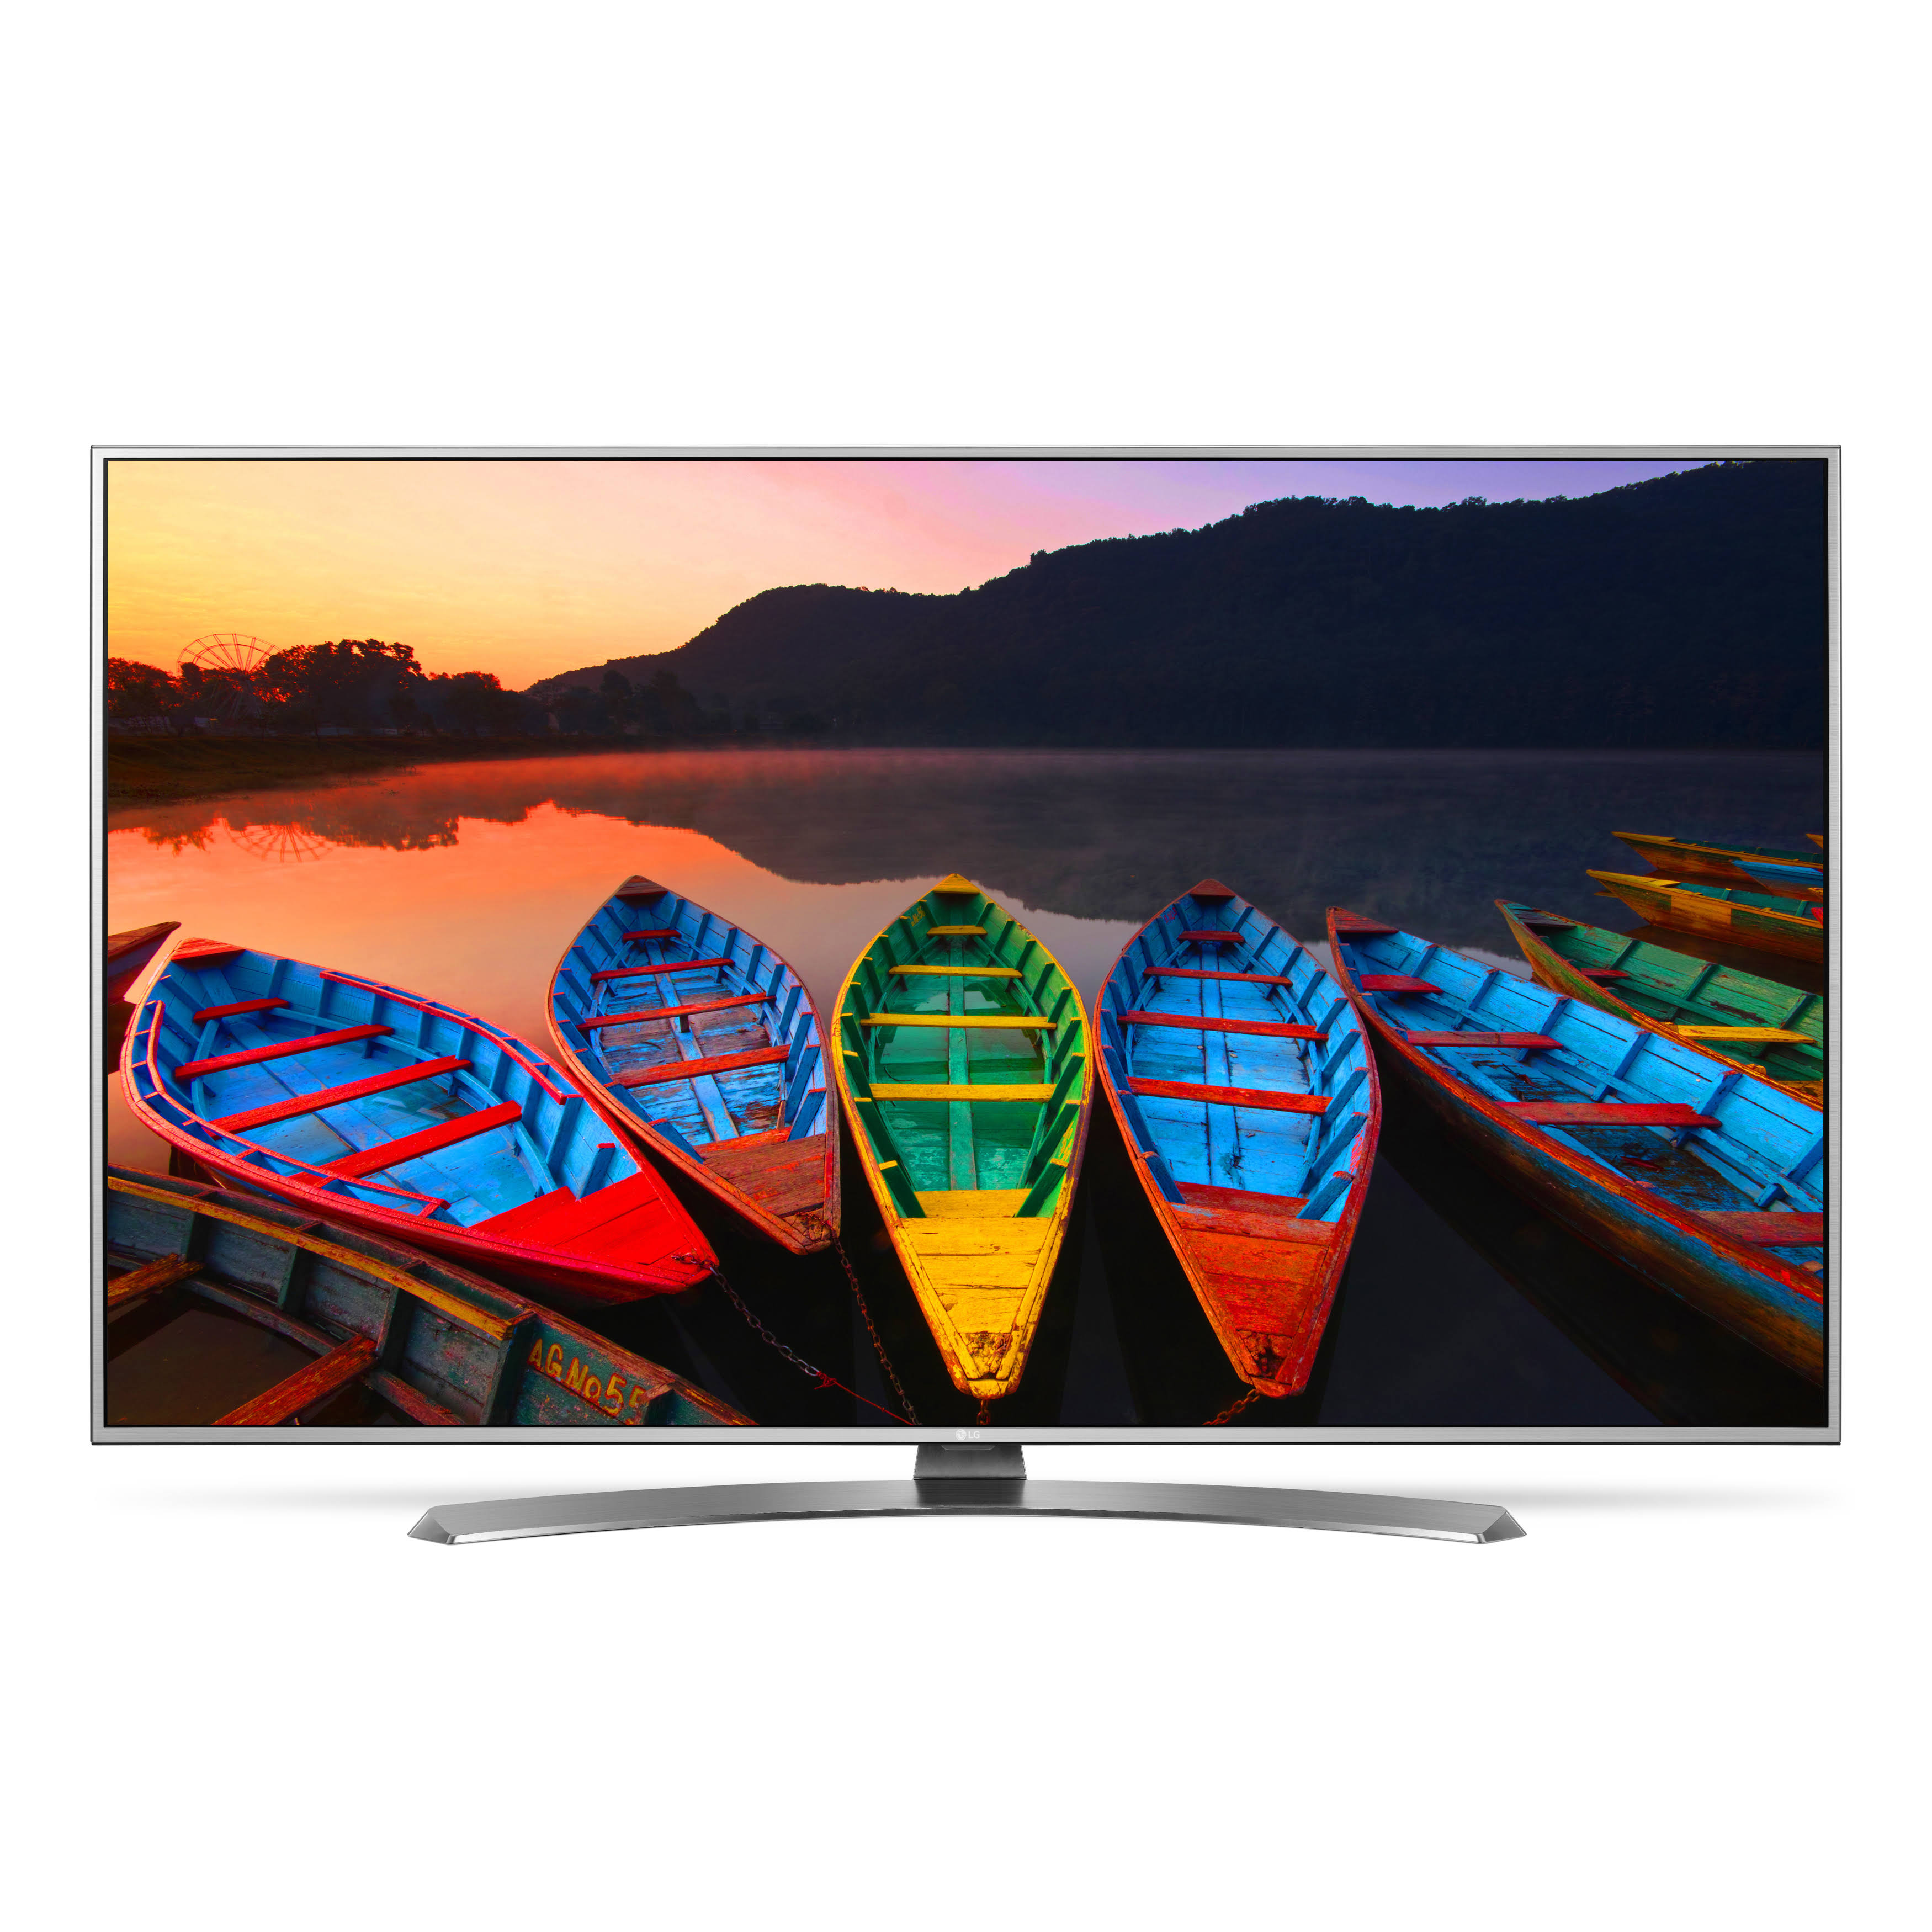 LG إلكترونيات 55UH7700 55-Inch 4K Ultra HD Smart LED TV (2016 Model)